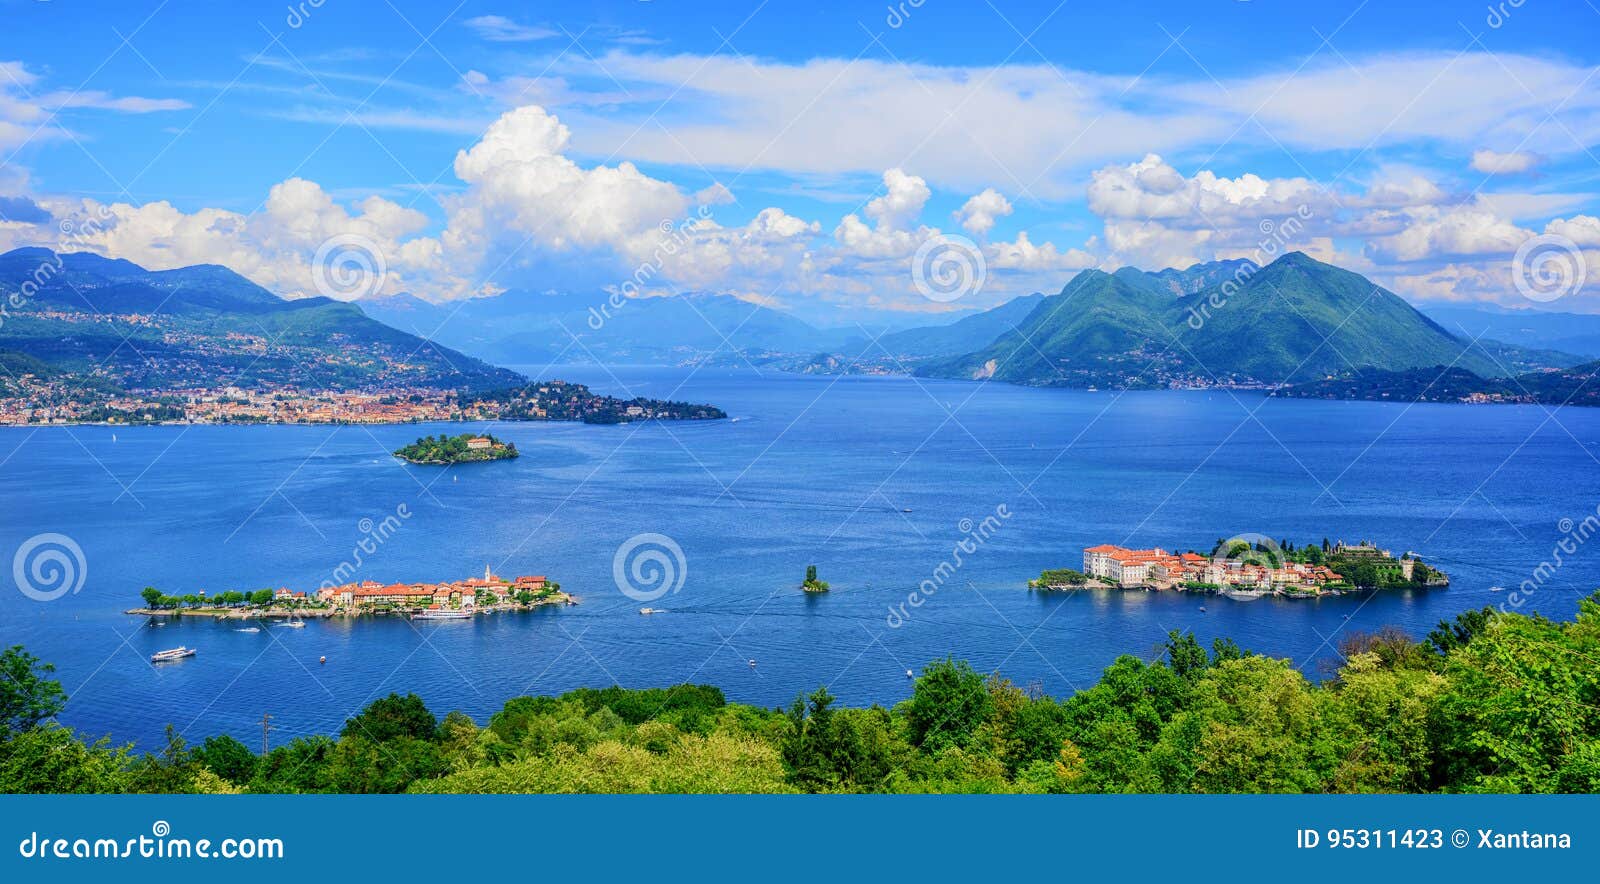 panoramic view of lago maggiore lake, italy